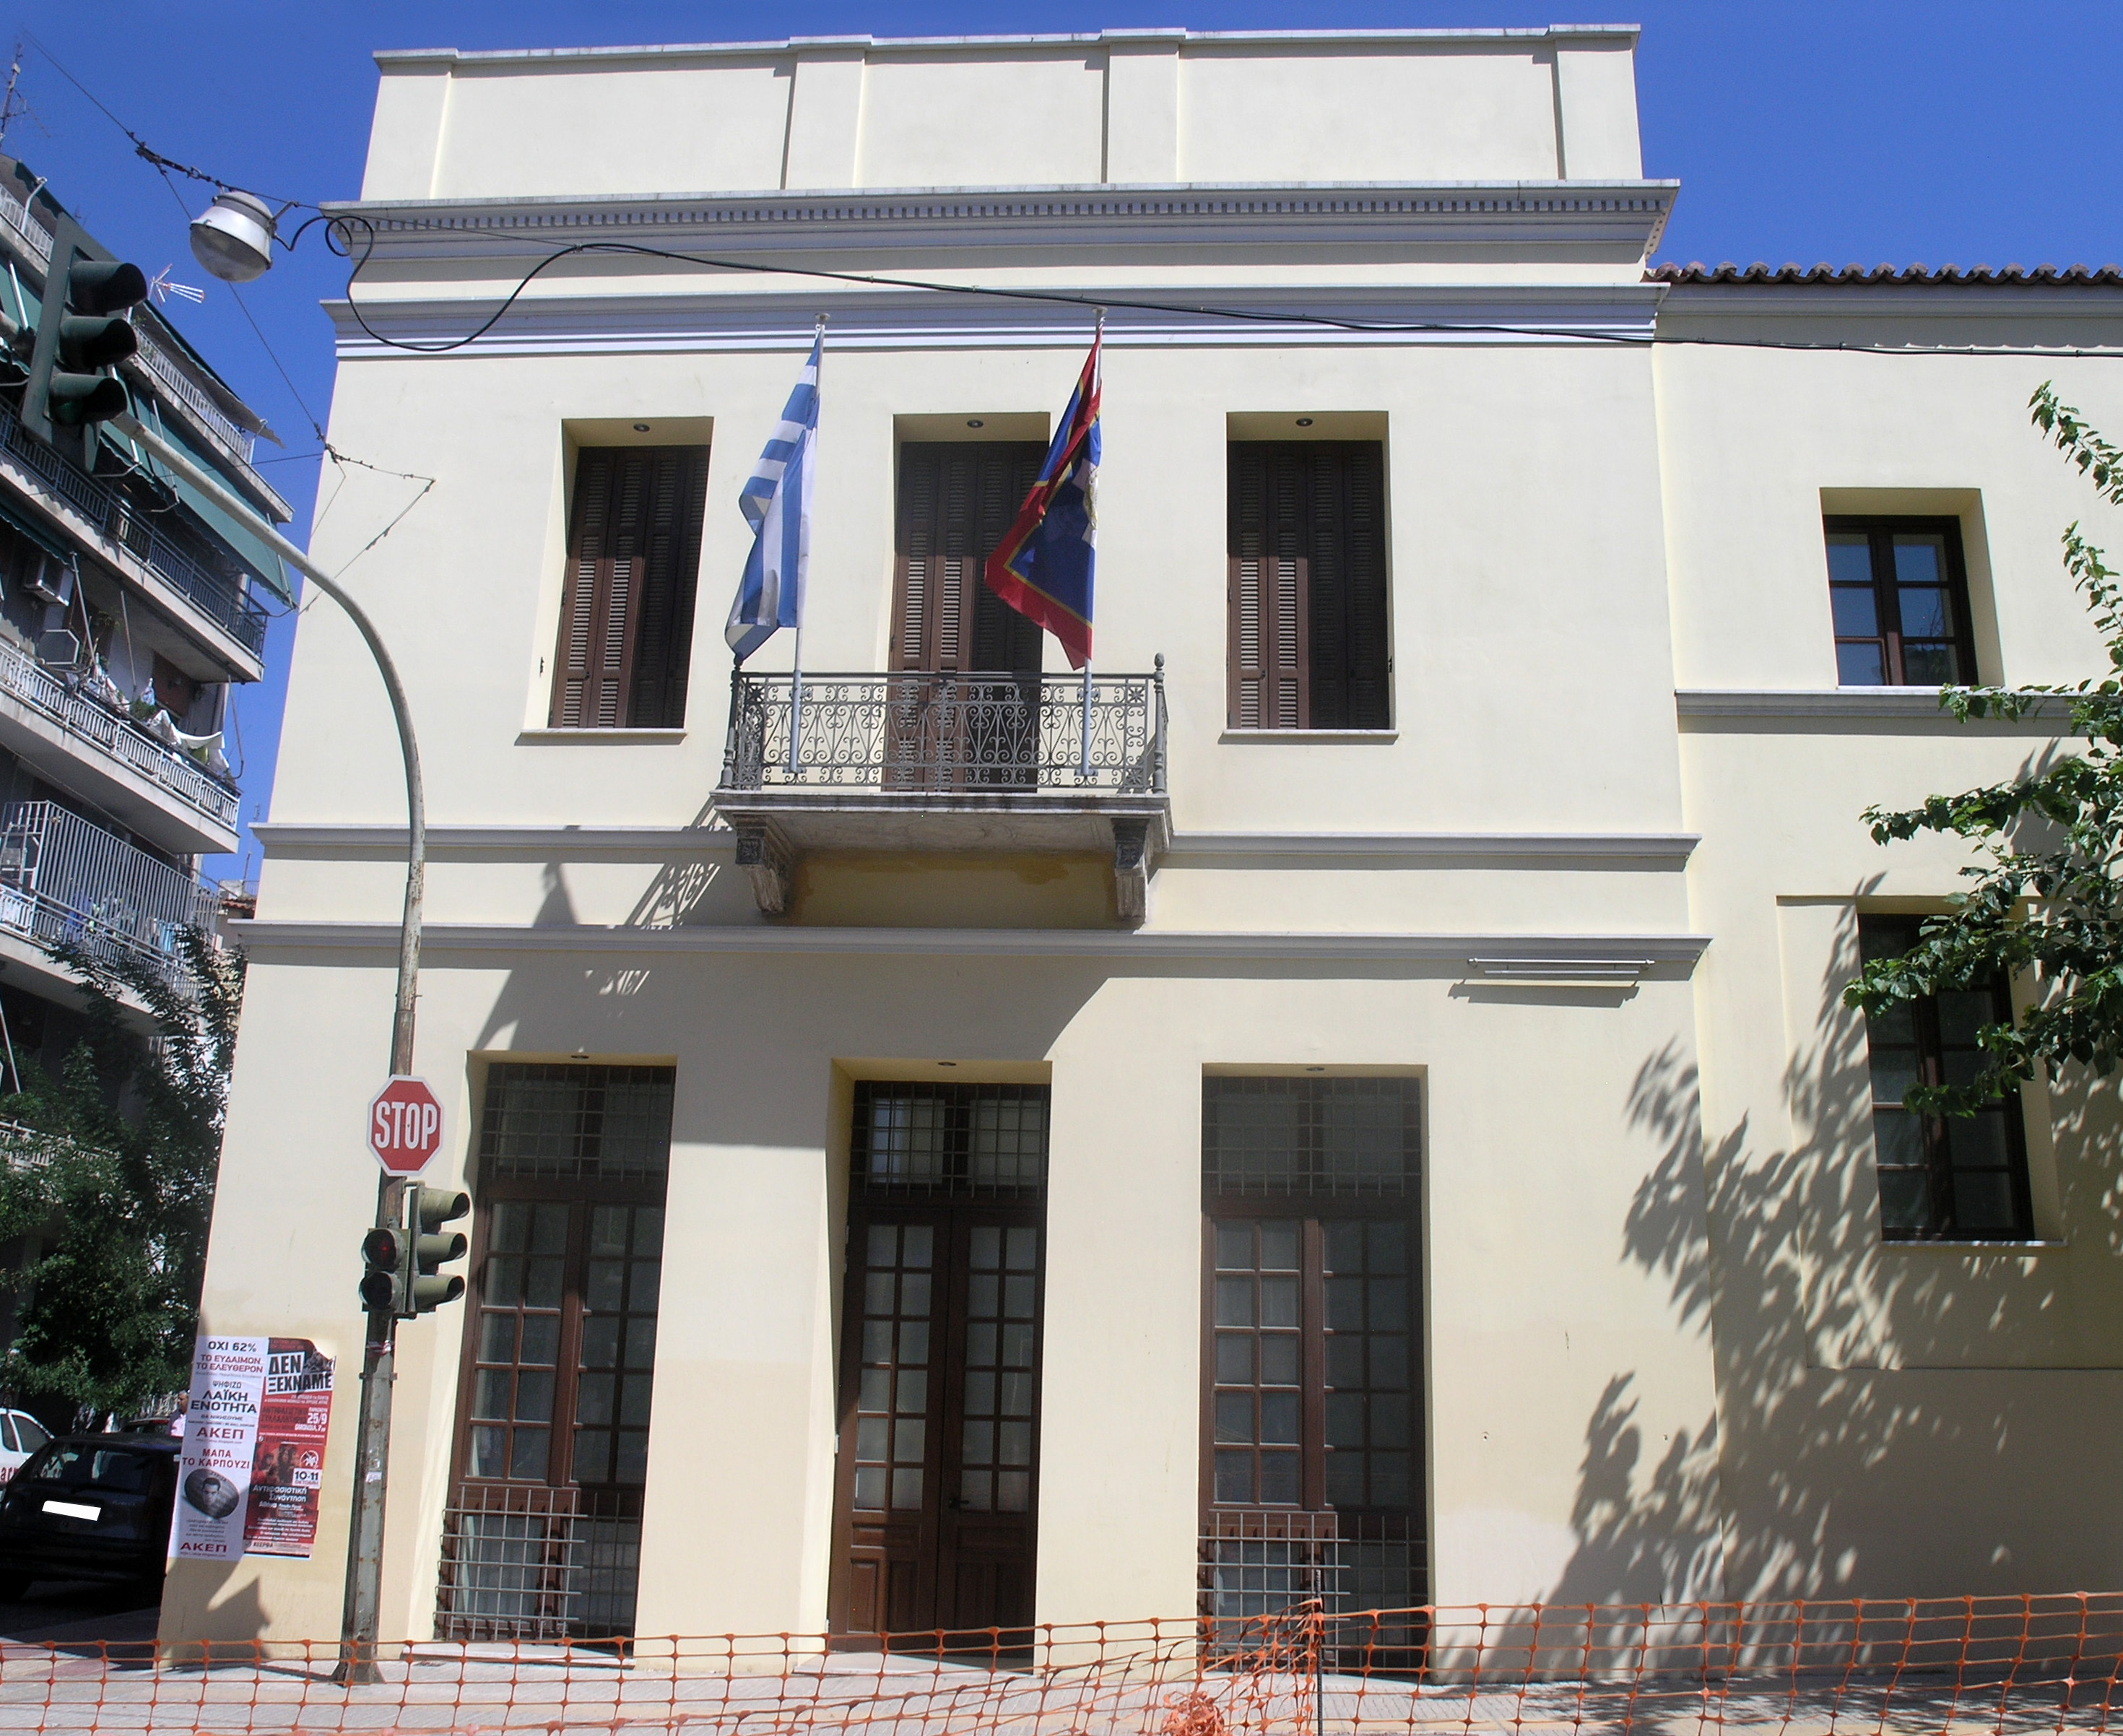 View of the façade on Myllerou street